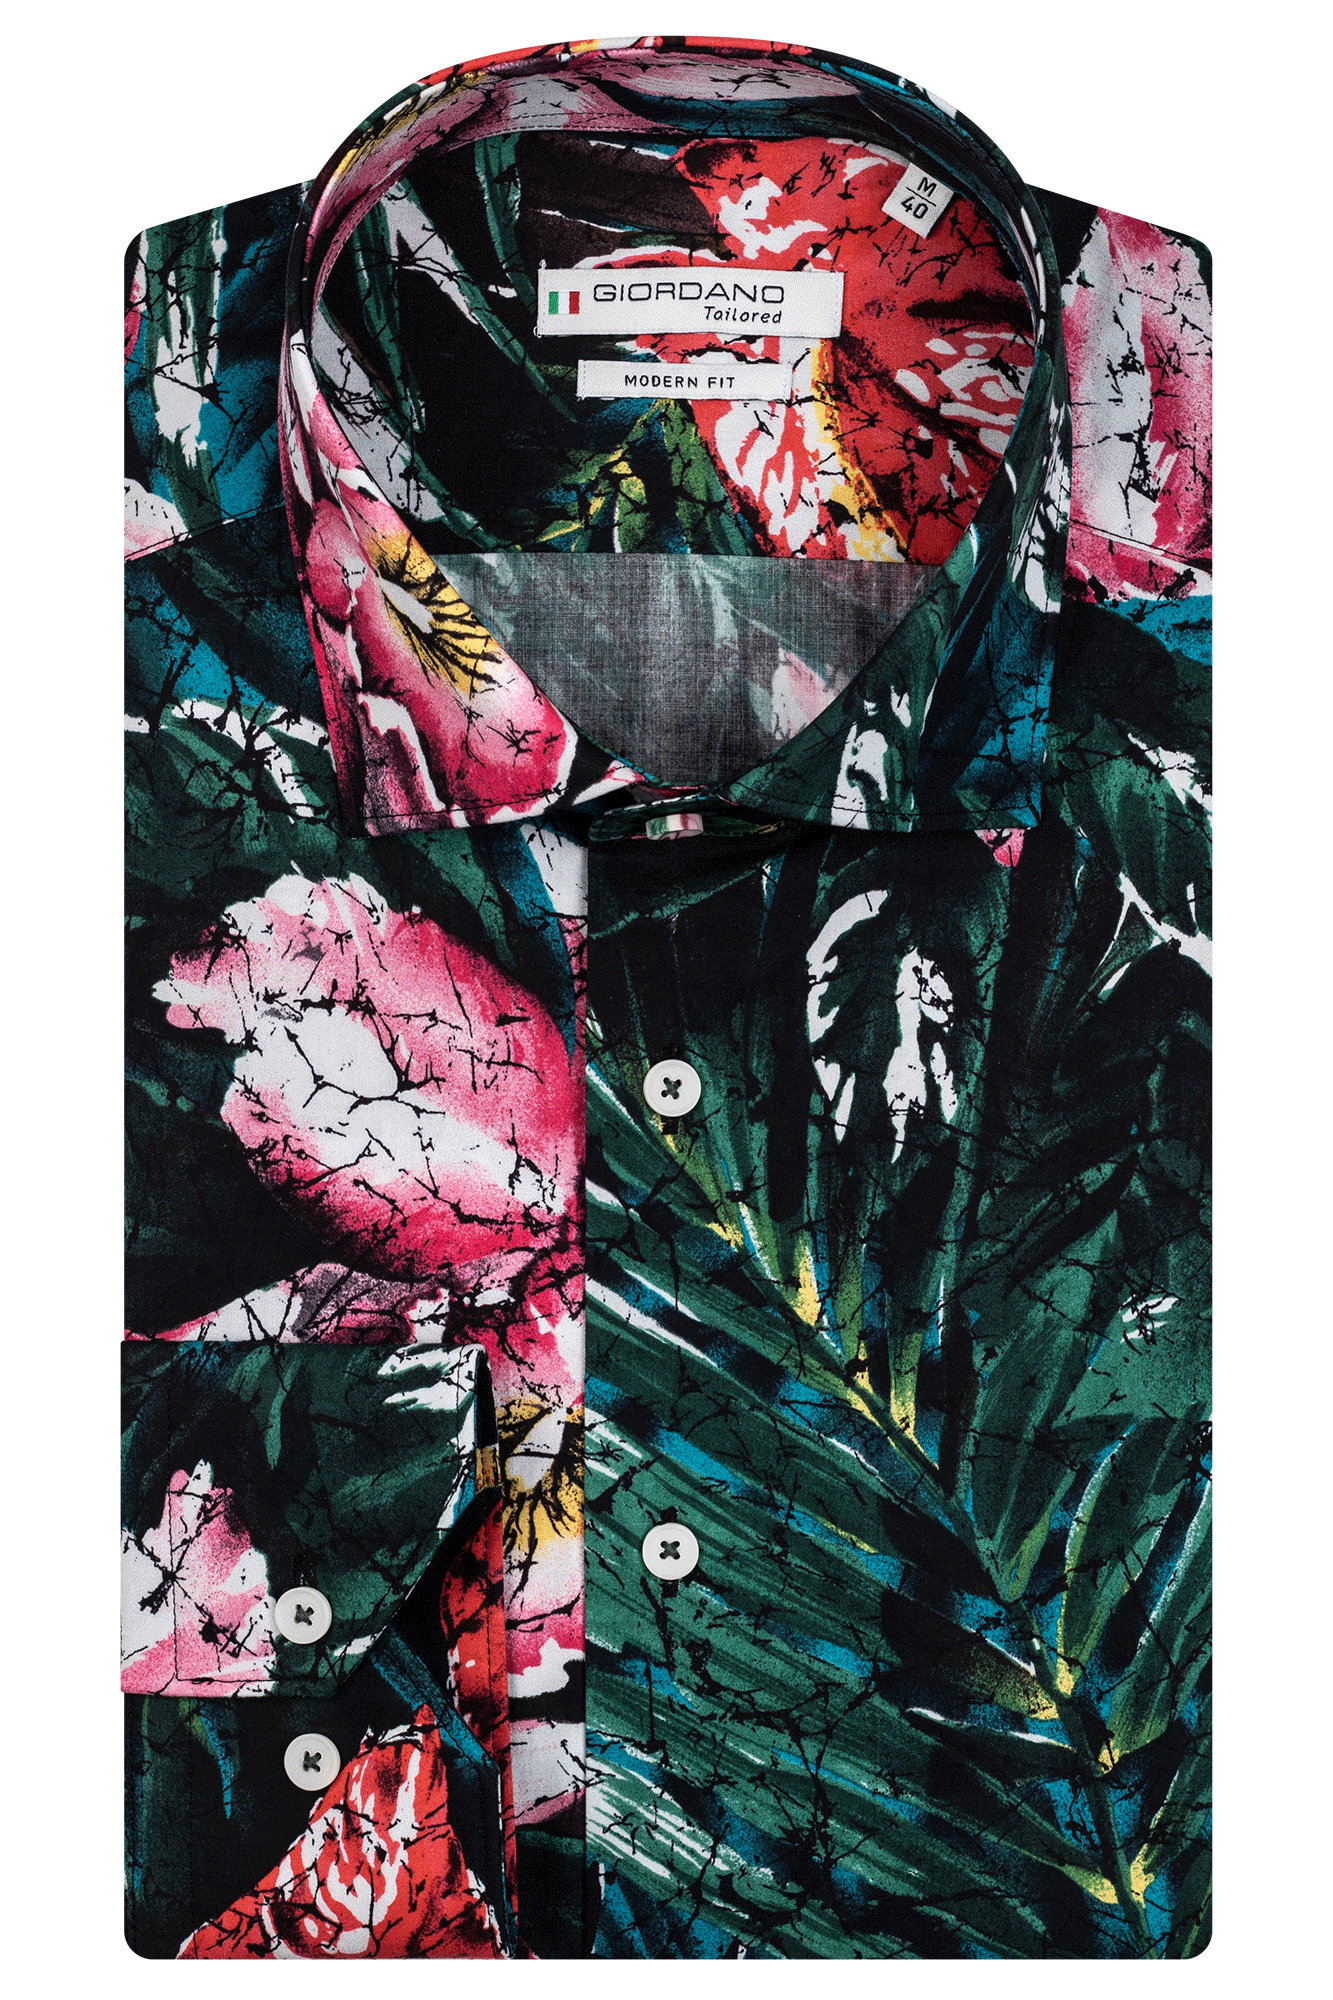 Bold jungle print by Giordano